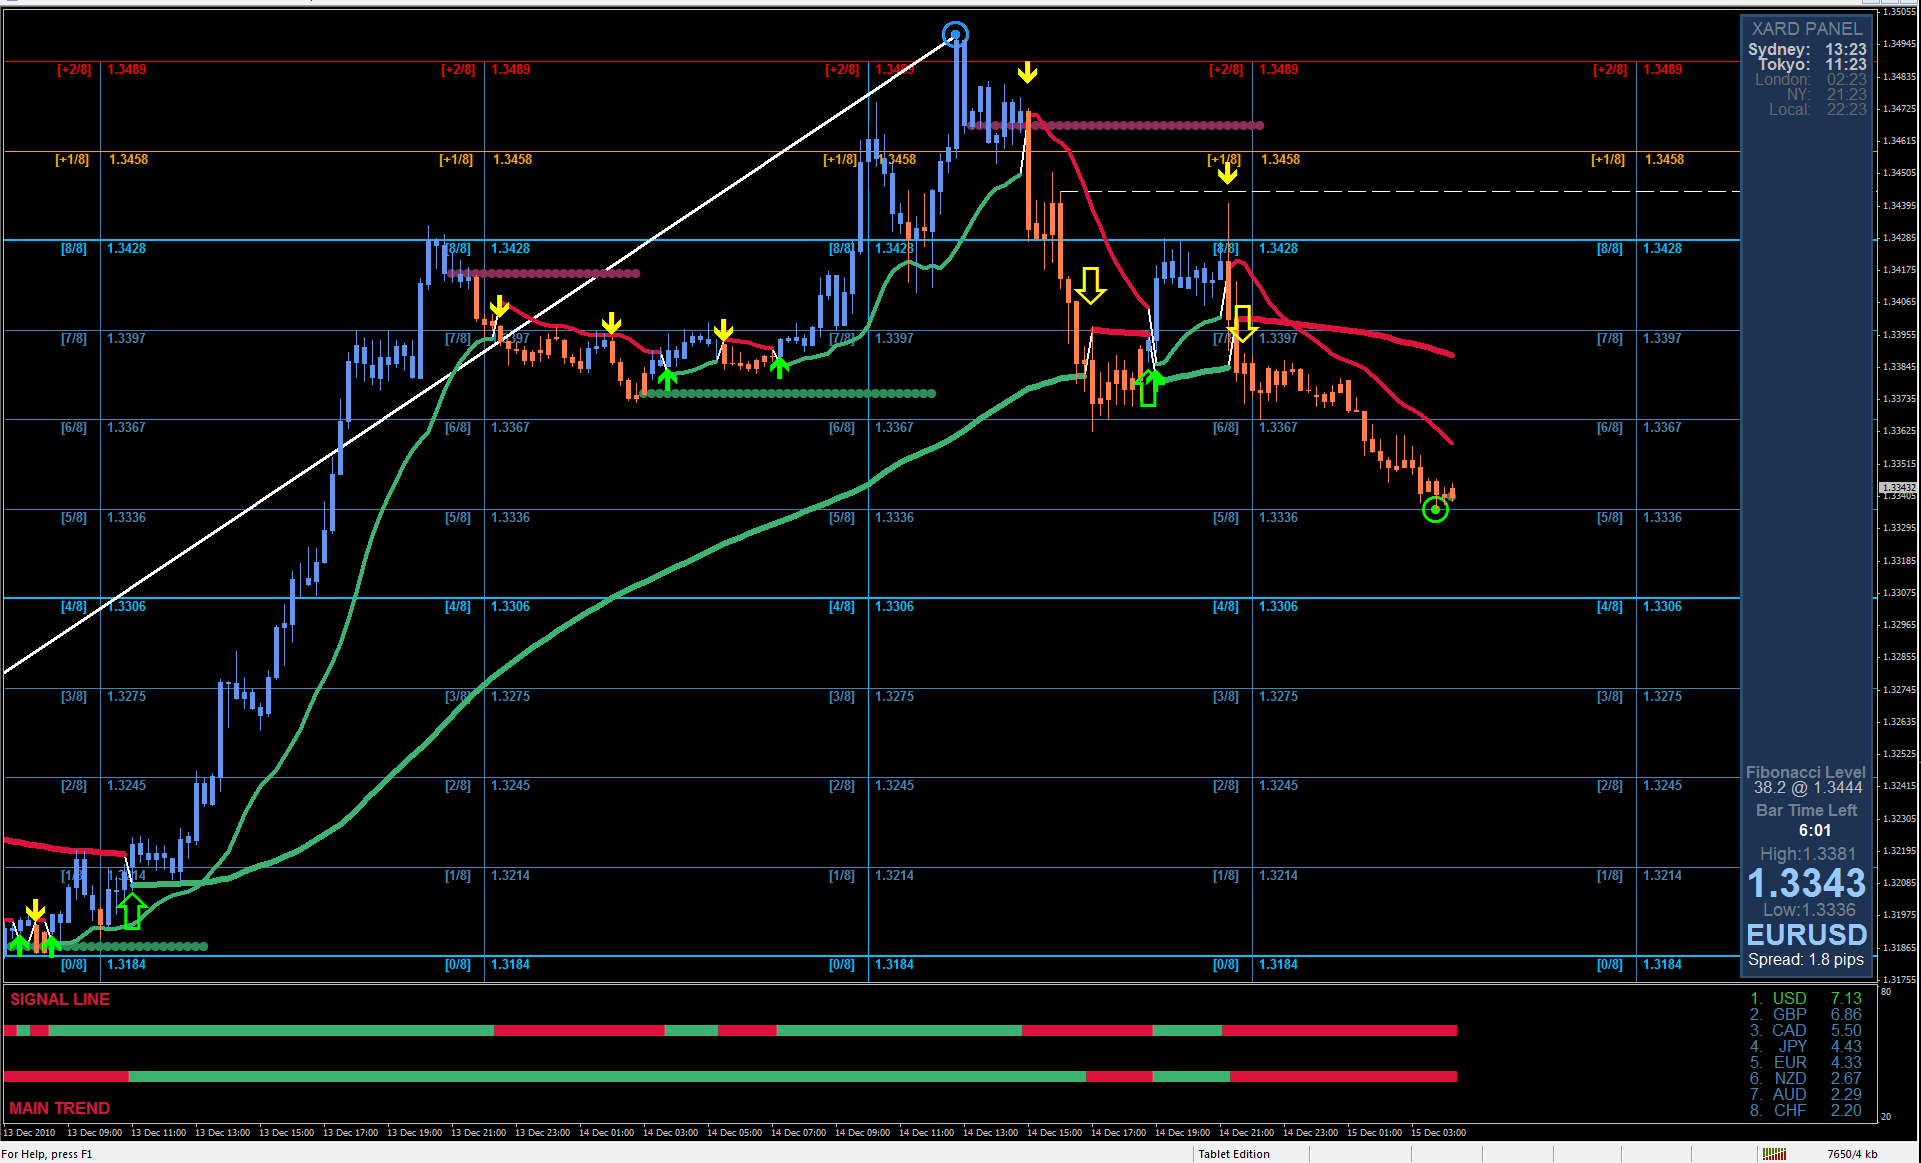 GBP/USD facing strong bearish pressure after breaking key support, big upcoming drop!